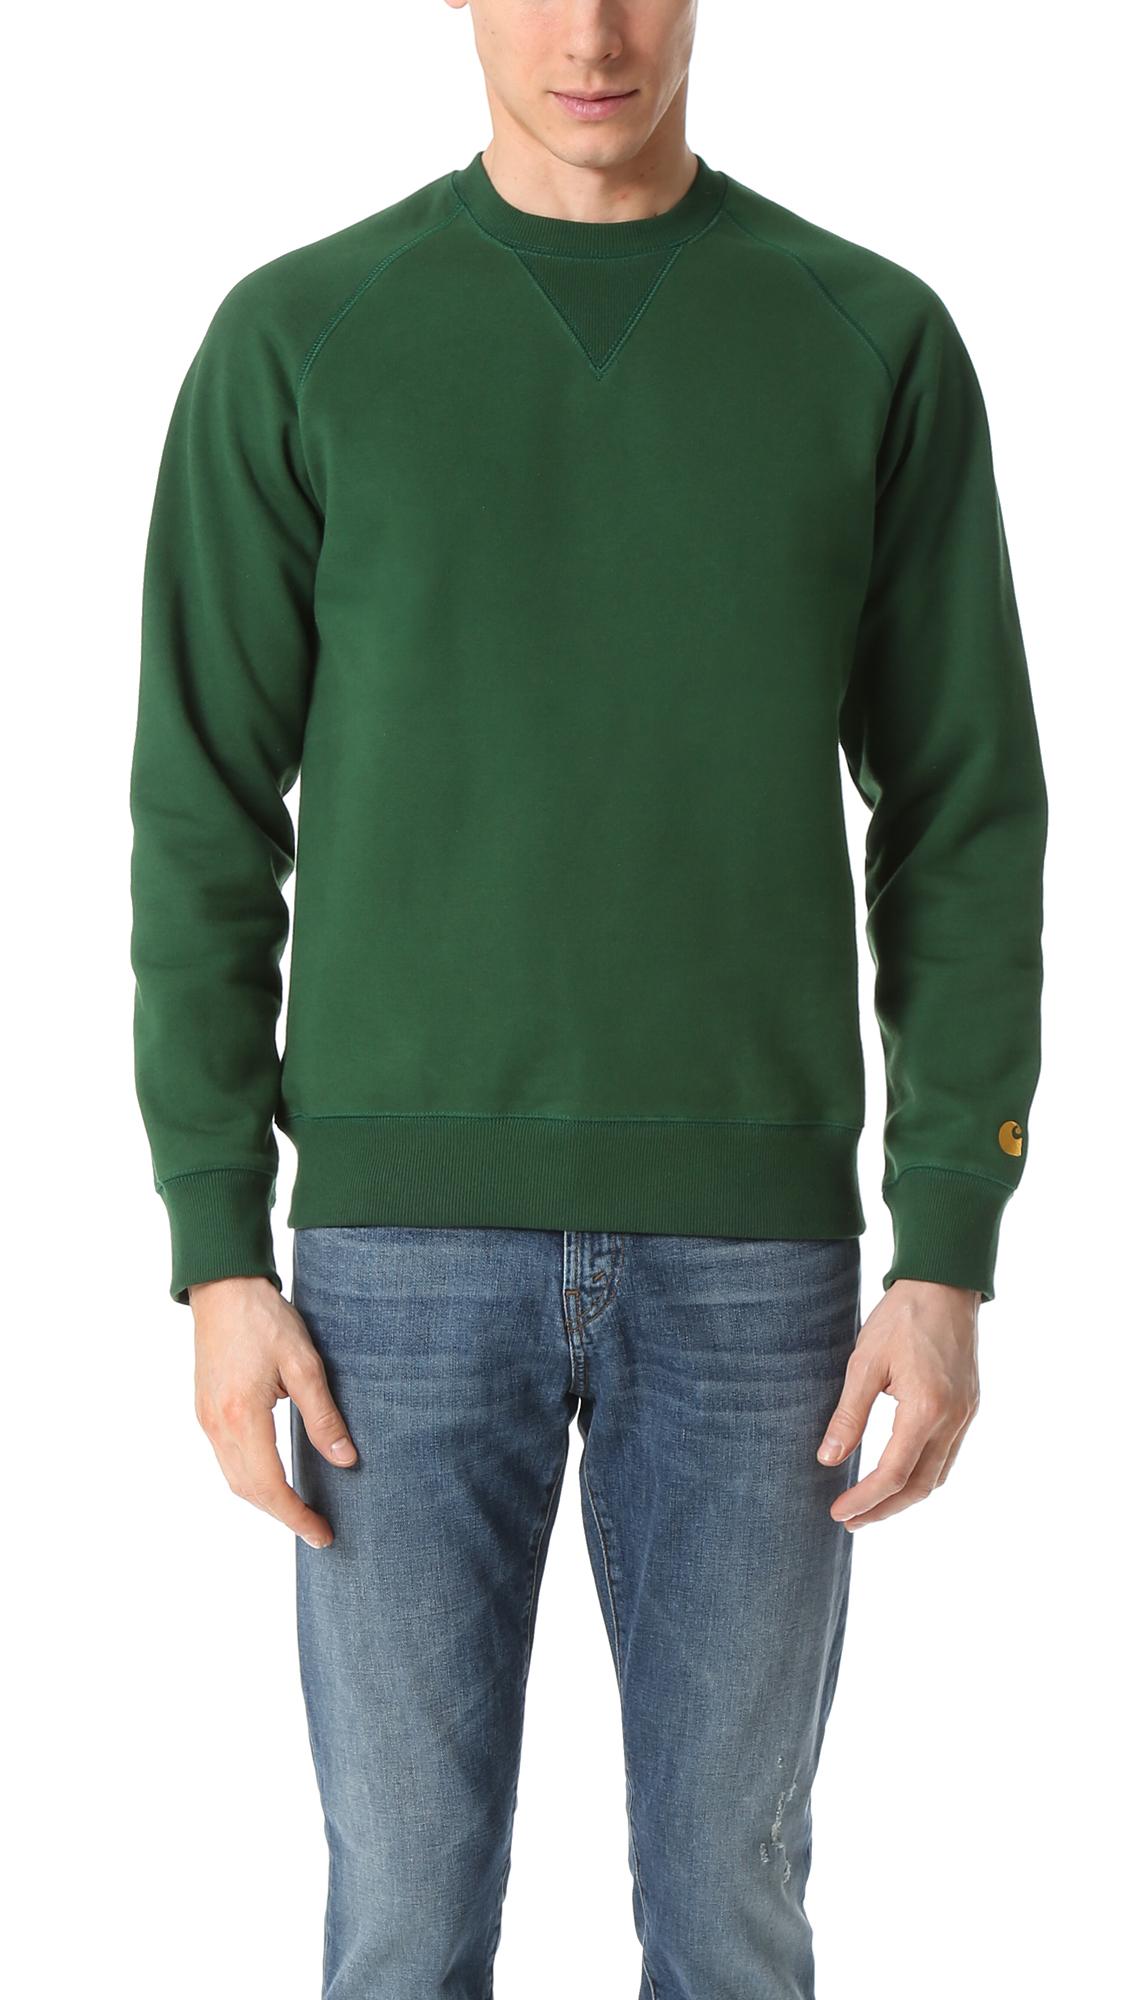 Lyst - Carhartt Wip Chase Crew Neck Sweatshirt in Green for Men